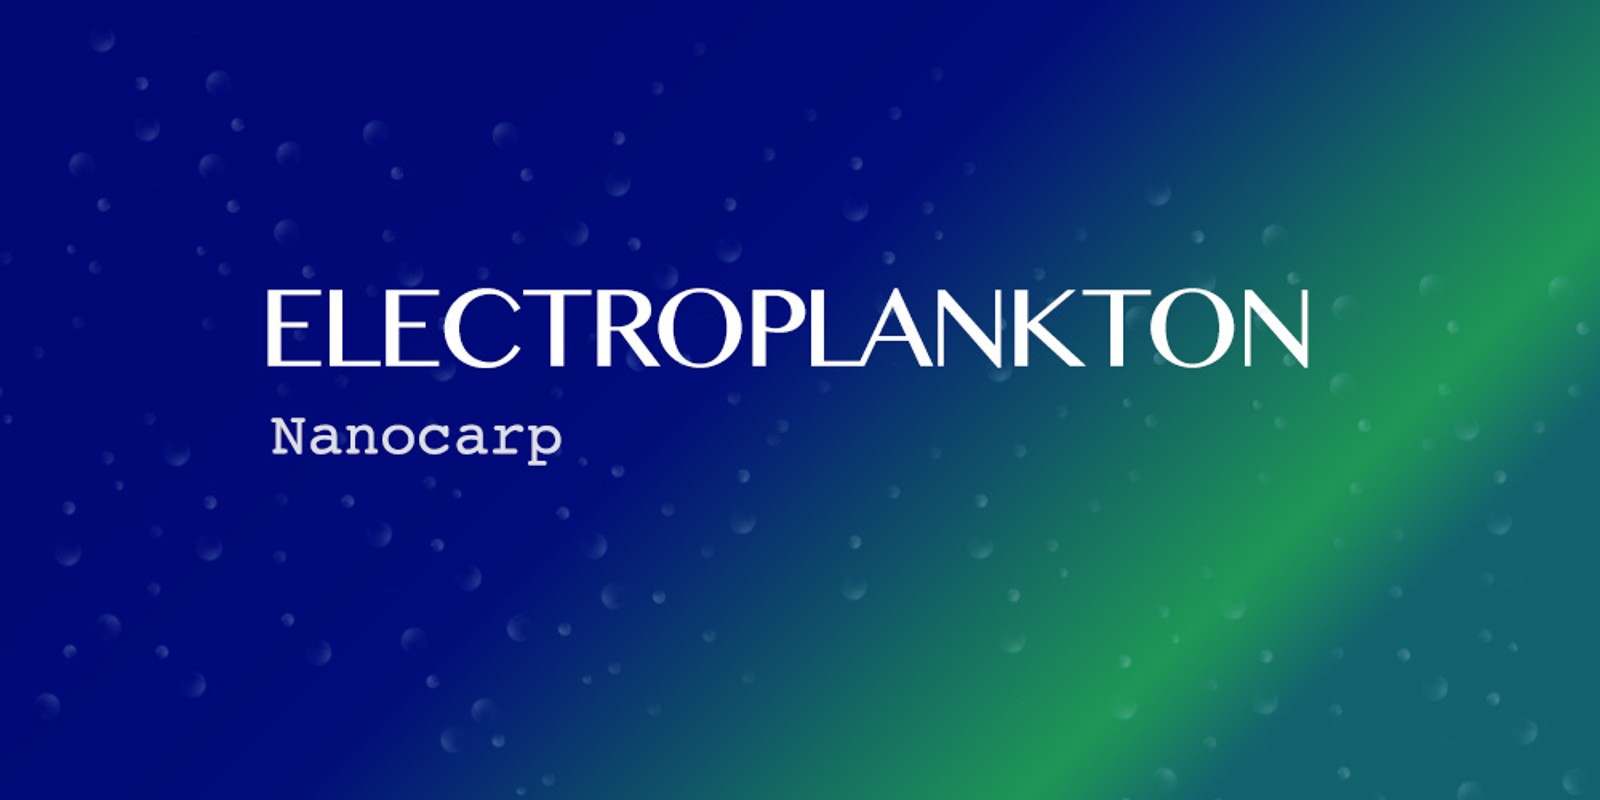 Electroplankton™ Nanocarp